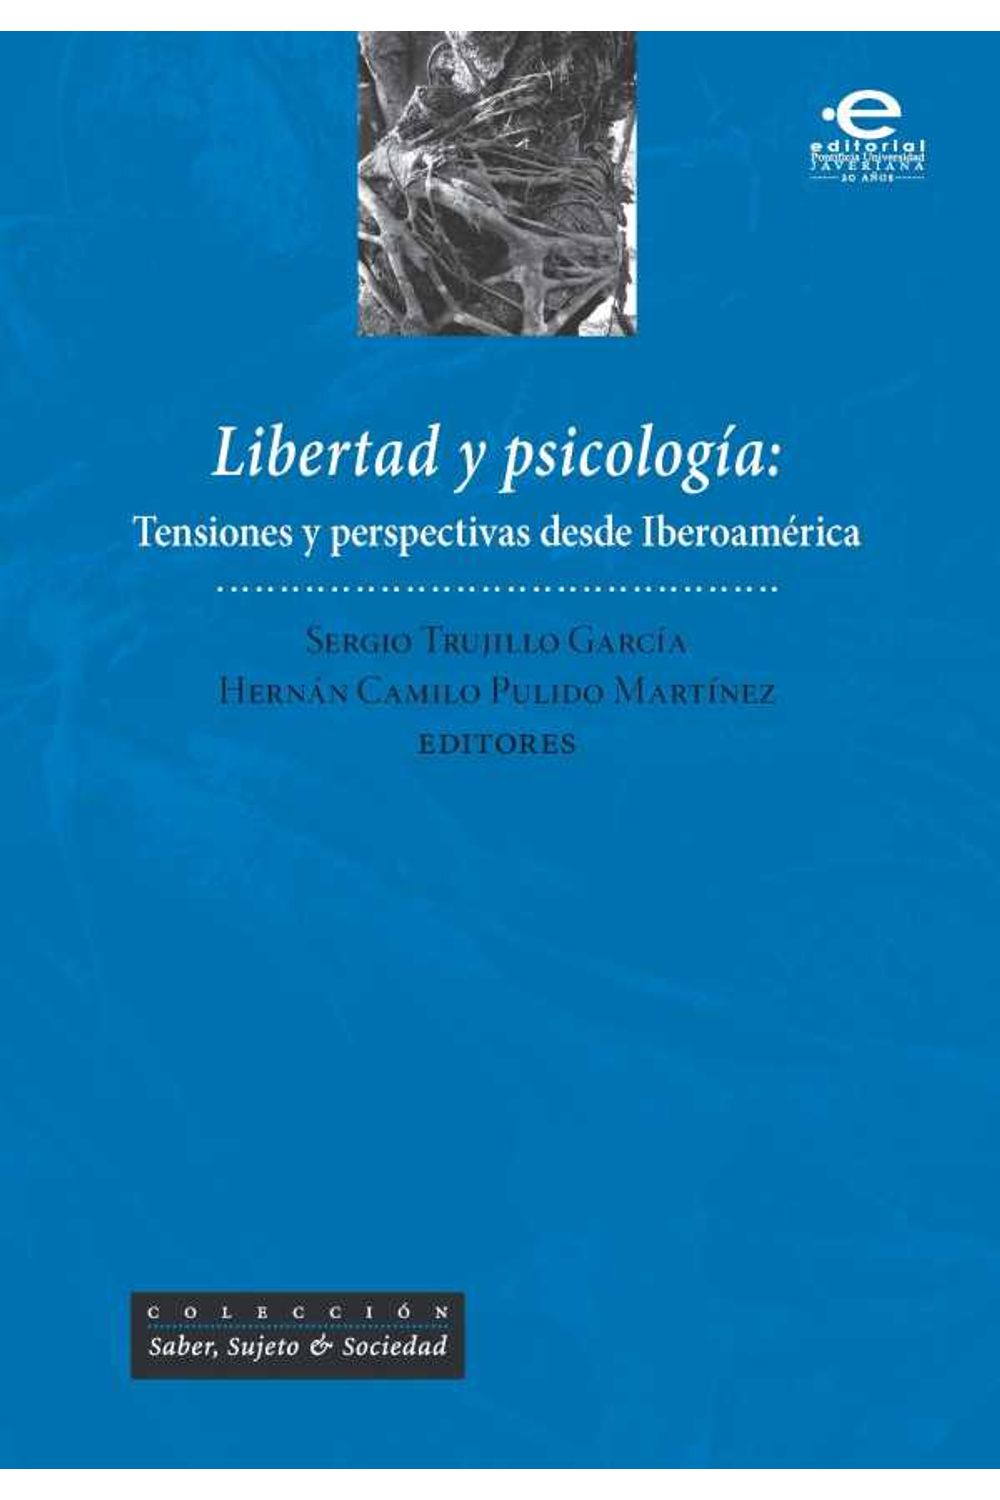 bw-libertad-y-psicologiacutea-editorial-pontificia-universidad-javeriana-9789587167740